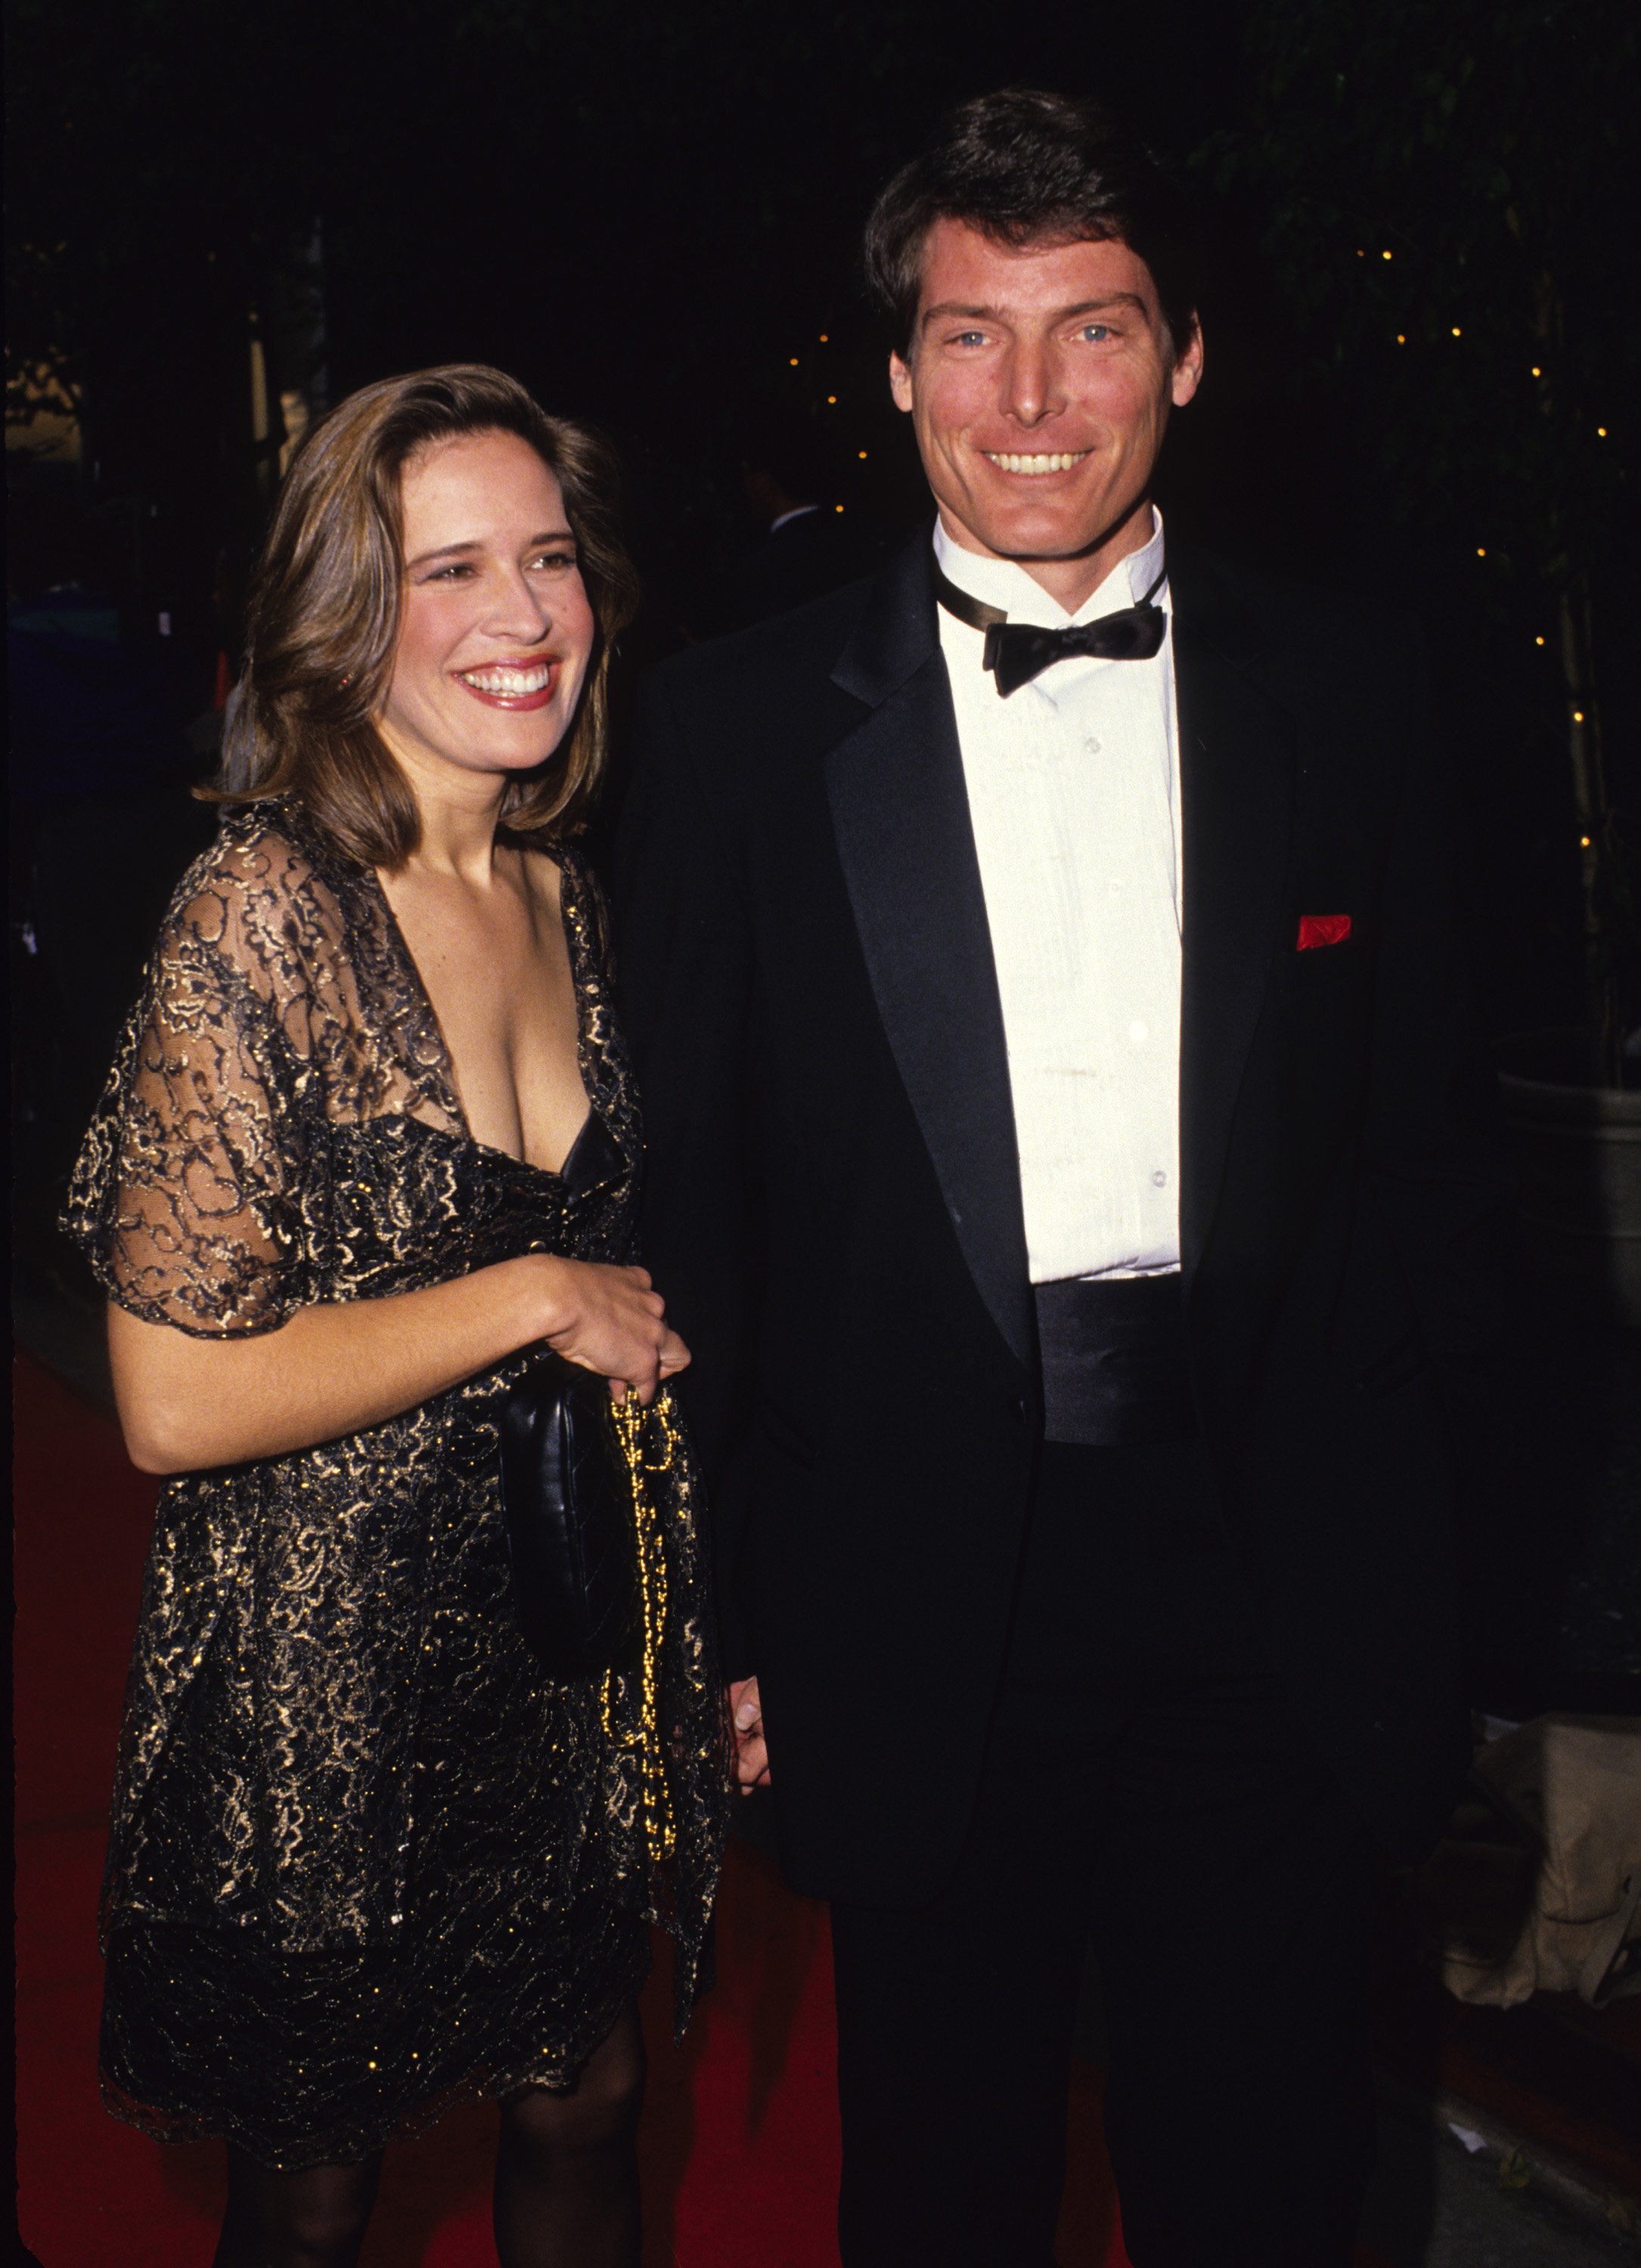 Christopher Reeve und Frau Dana während Christopher Reeve File Photos in Los Angeles, Kalifornien, USA. | Quelle: Getty Images